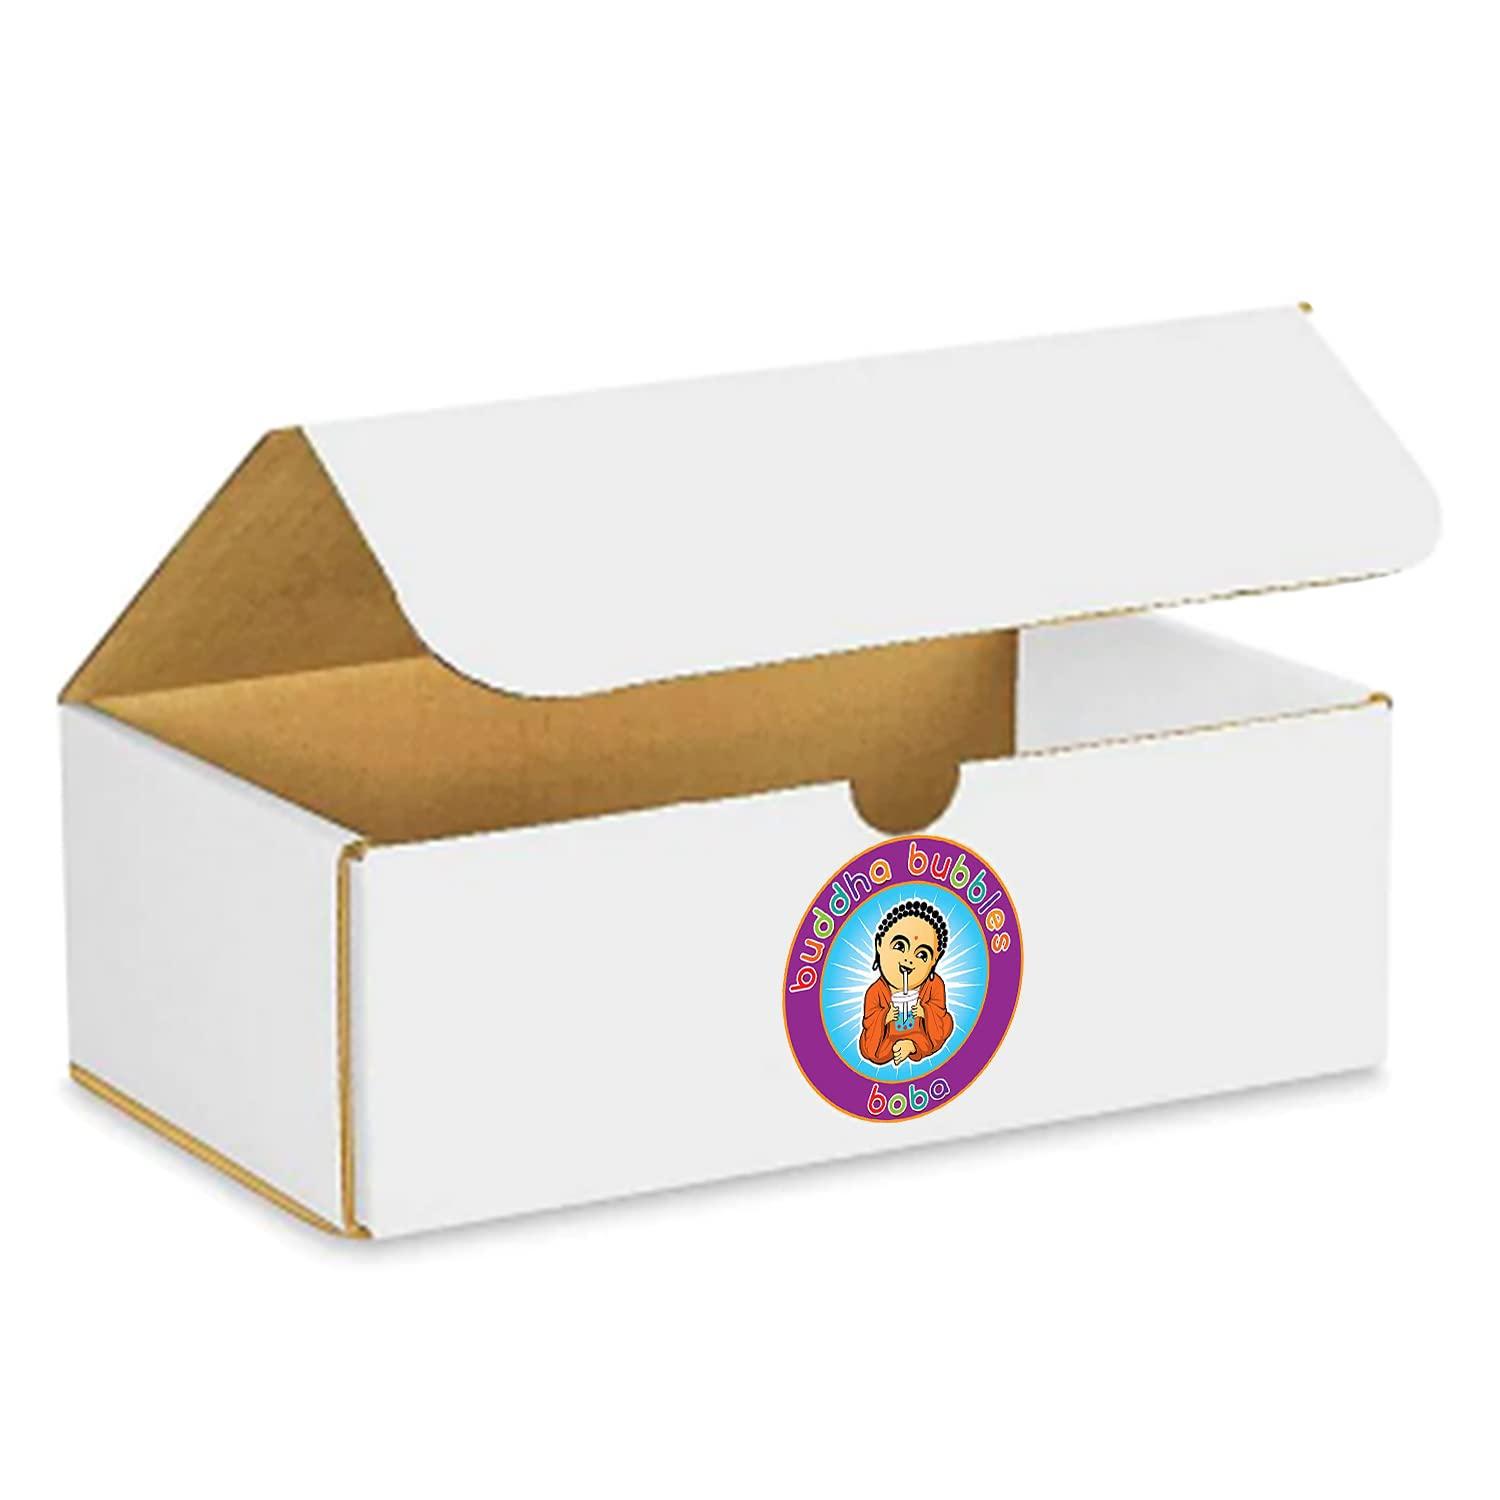 CAFE LATTE (Coffee) Boba Tea Kit / Gift Box Includes Tea Powder, Tapioca  Pearls & Straws By Buddha Bubbles Boba